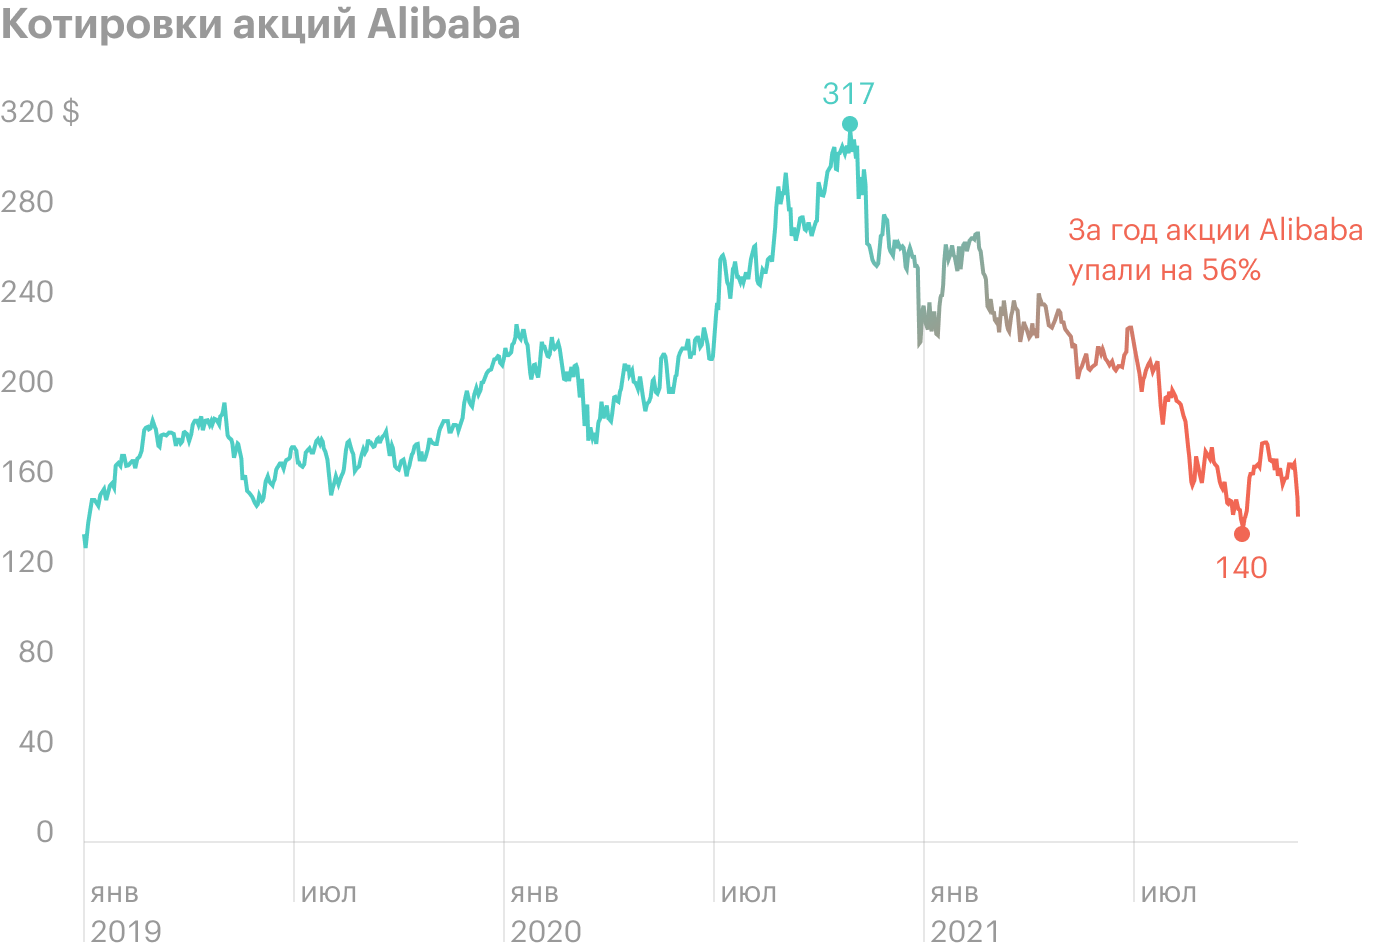 Сильно упавшие акции. Alibaba акции. Акции упали. Падение акций. Американские акции упали.